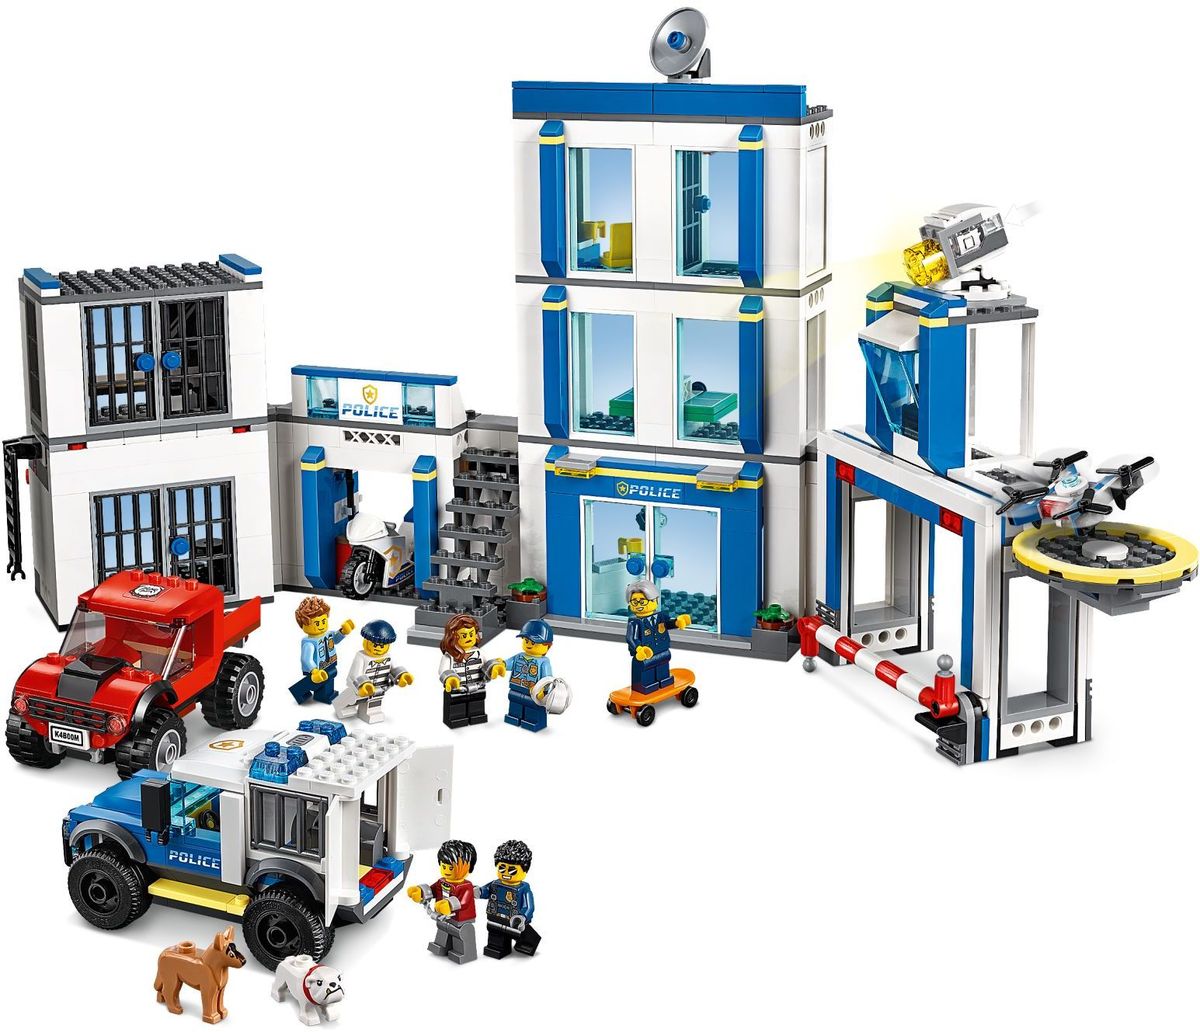 LEGO City 60246 Poliisiasema